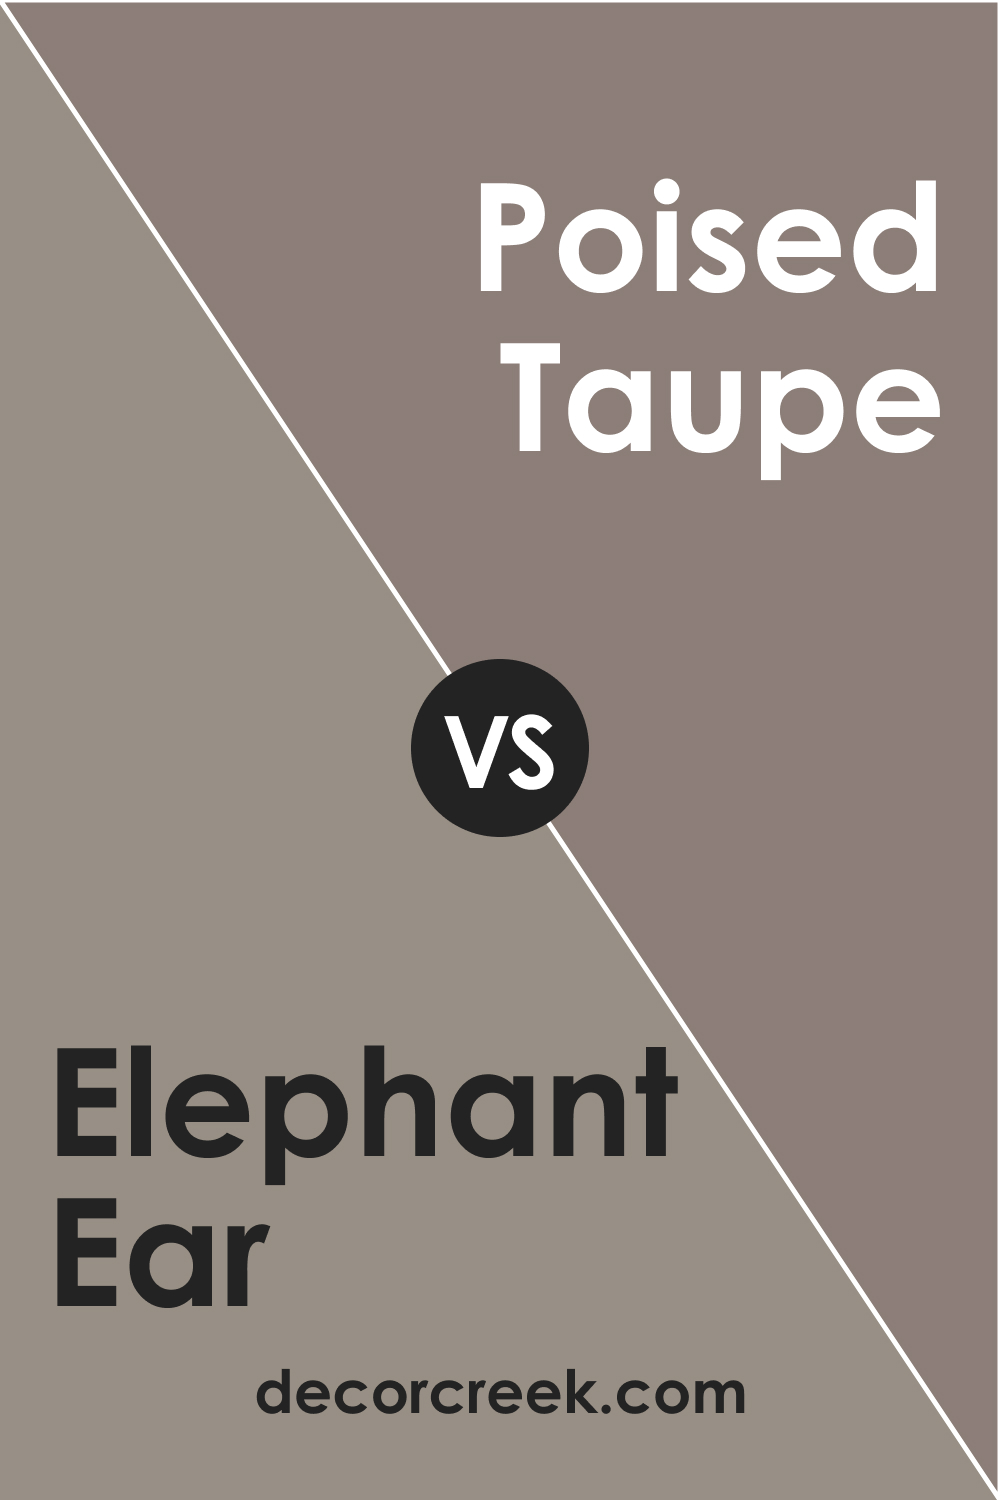 SW 9168 Elephant Ear vs. SW 6039 Poised Taupe